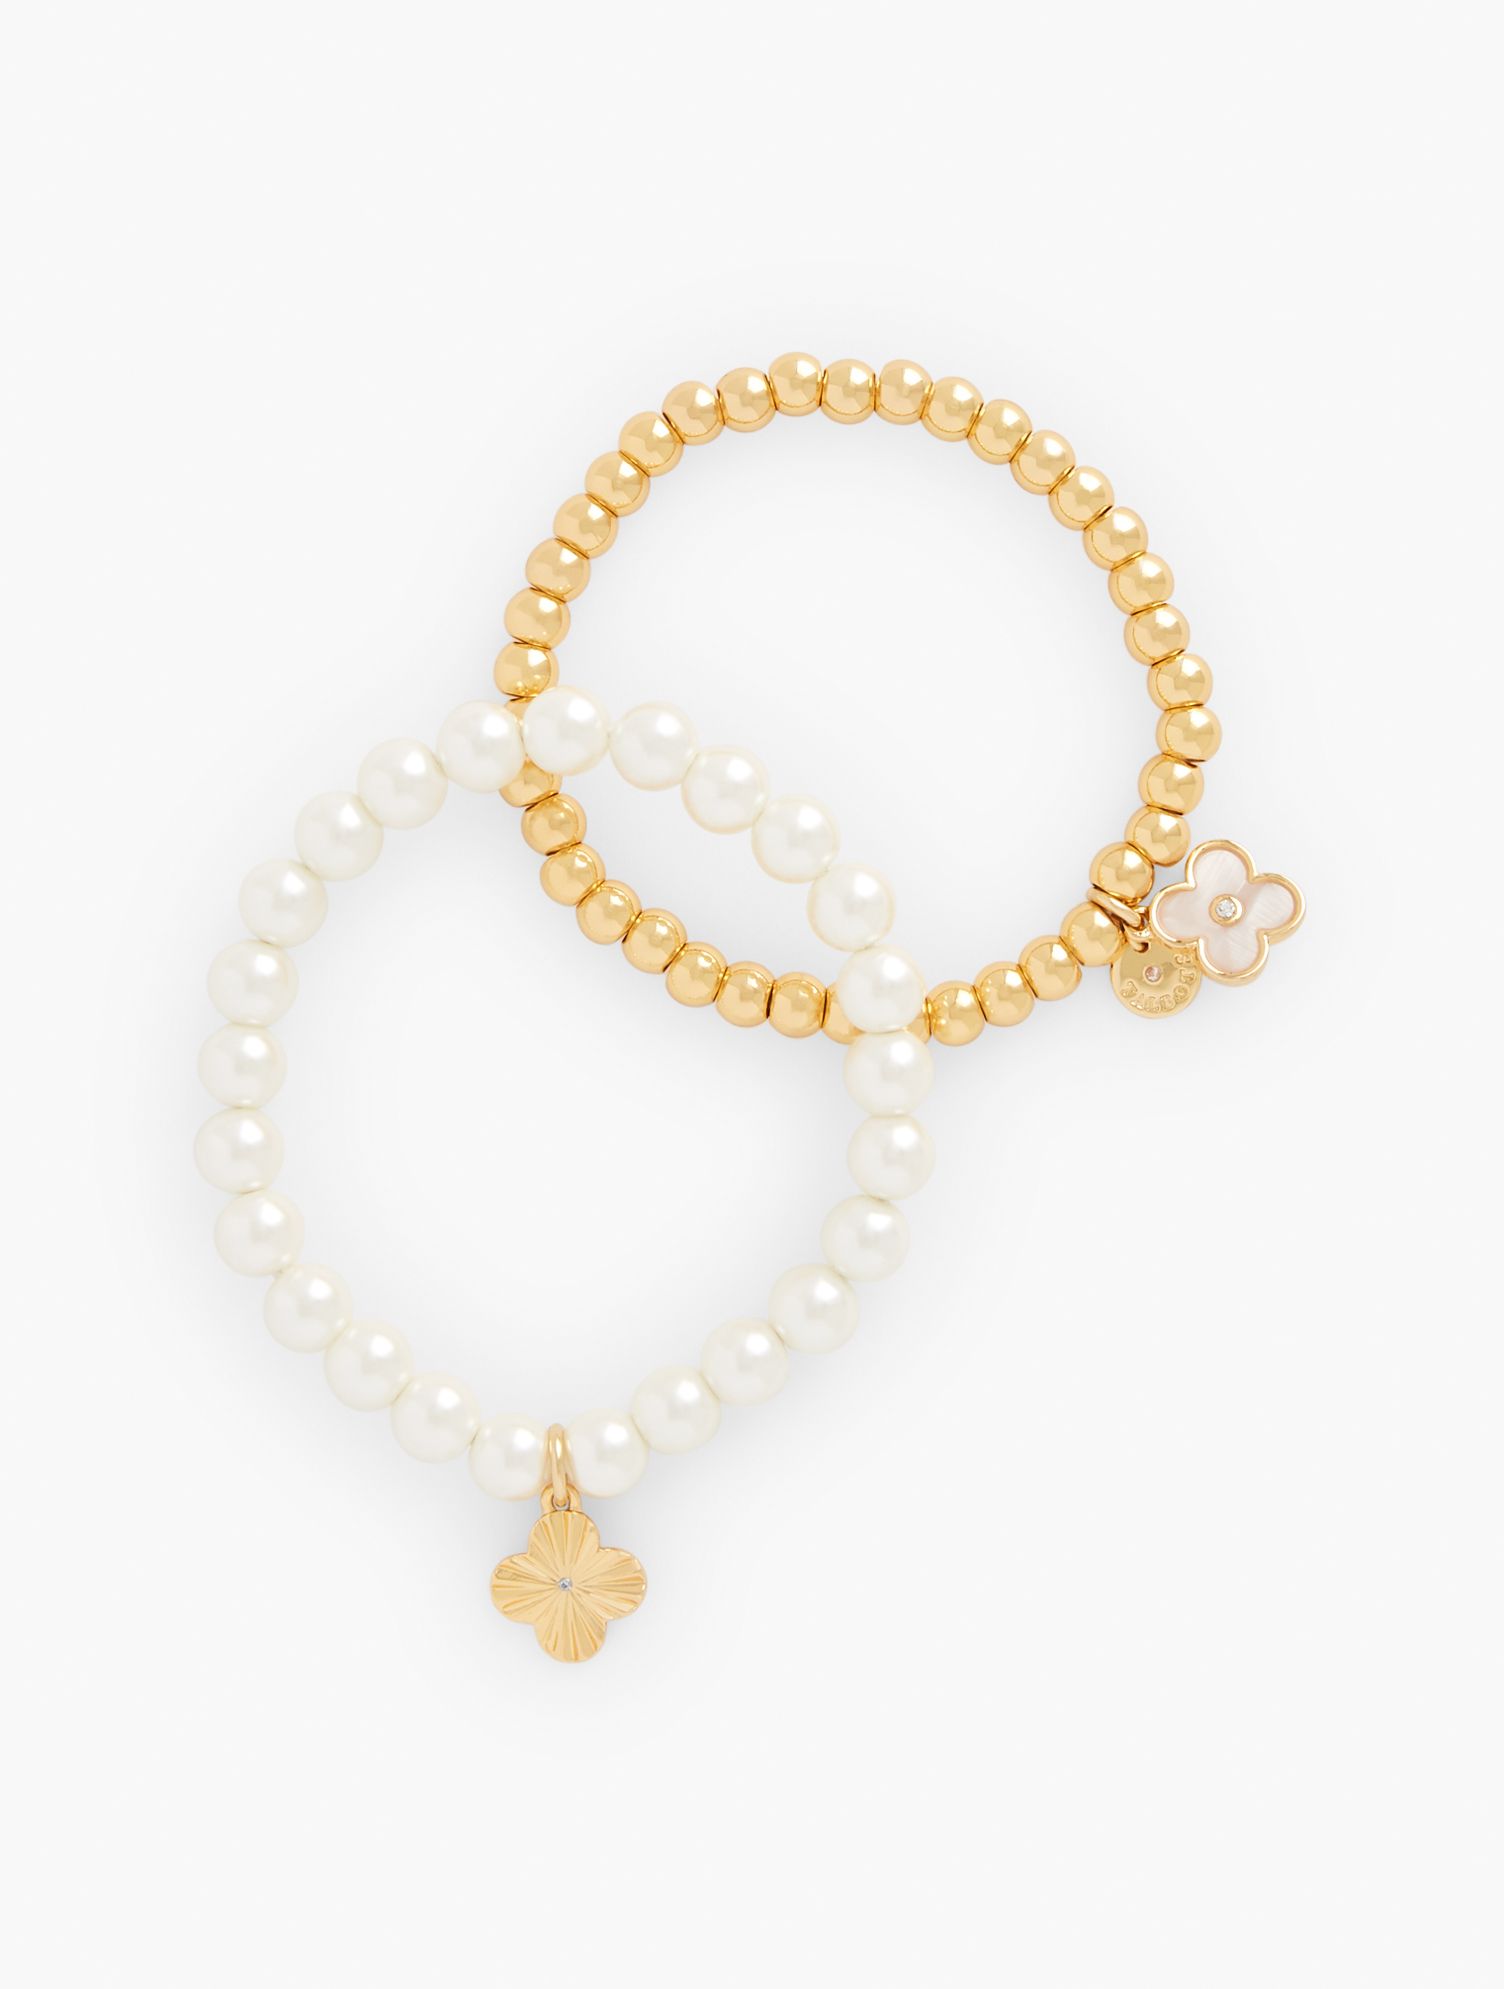 Quatrefoil Stretch Bracelet Set - Ivory Pearl/Gold - 001 Talbots | Talbots